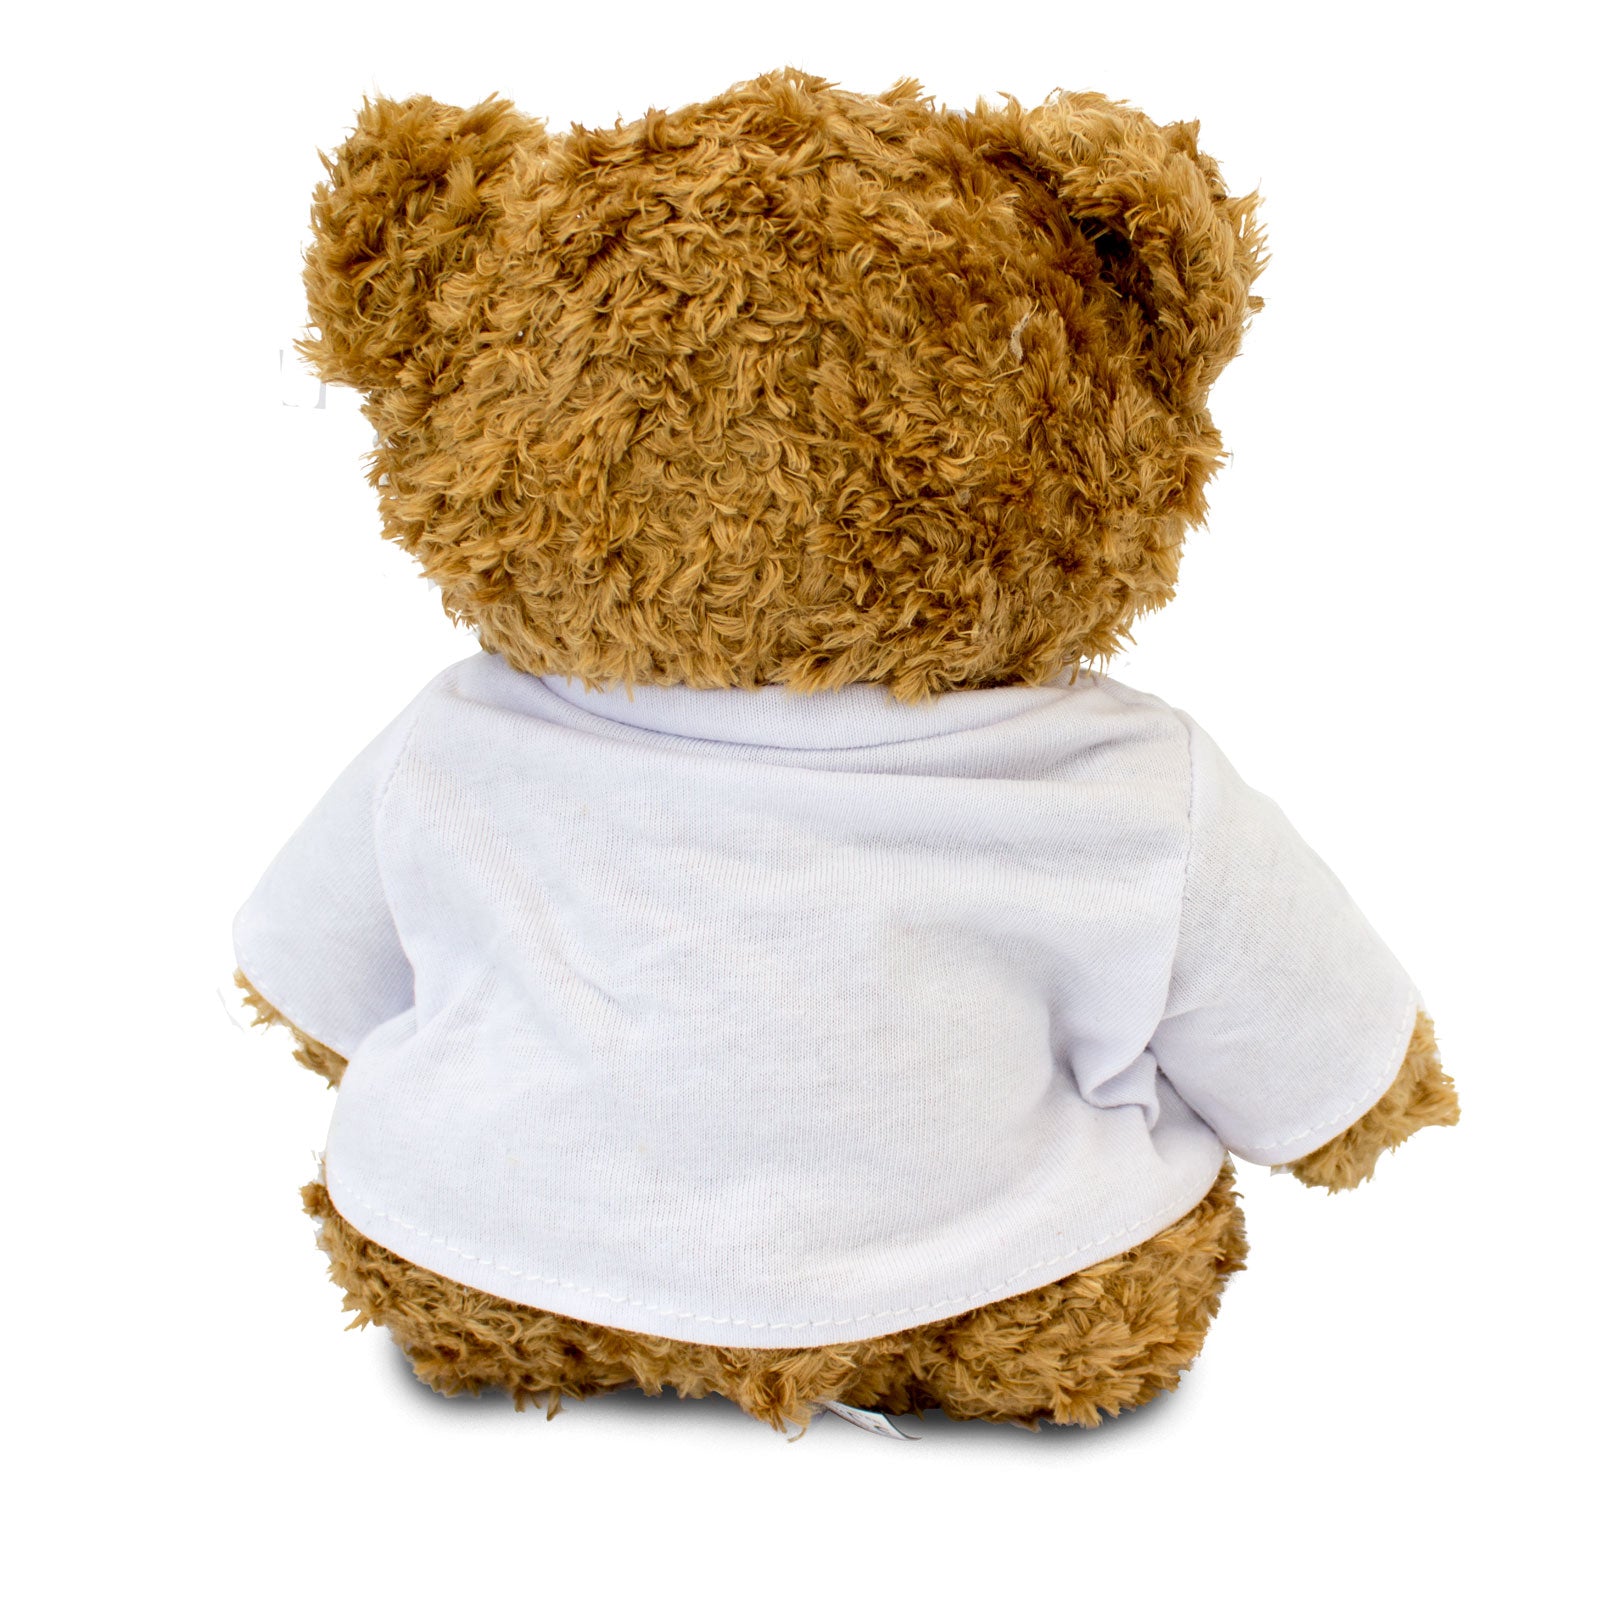 Get Well Soon Abina - Teddy Bear - Gift Present